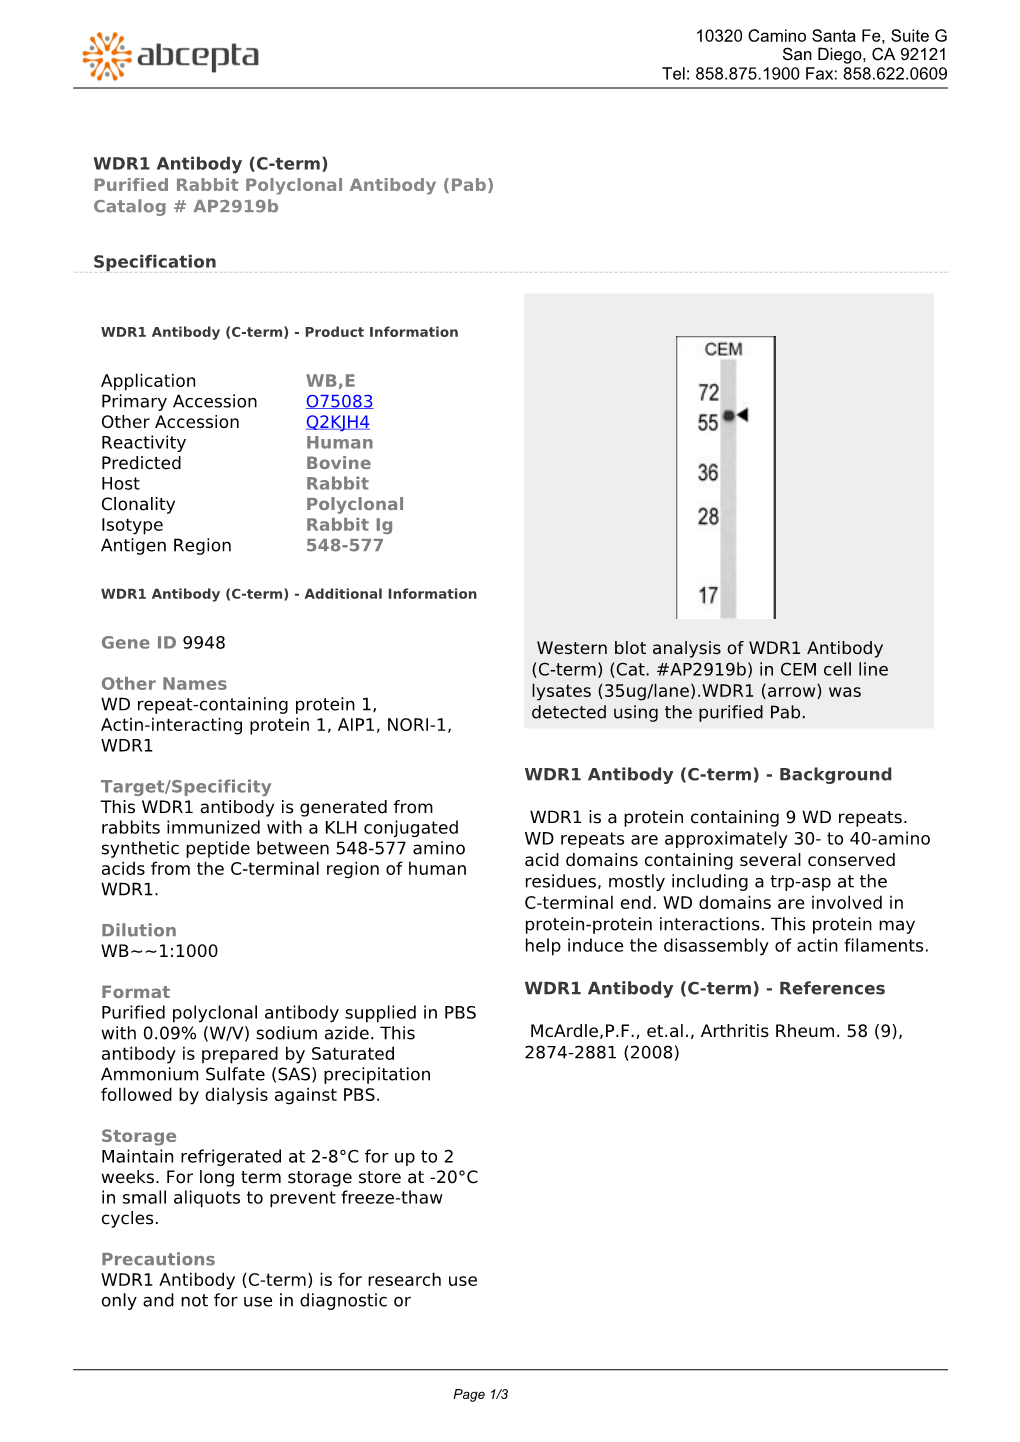 WDR1 Antibody (C-Term) Purified Rabbit Polyclonal Antibody (Pab) Catalog # Ap2919b